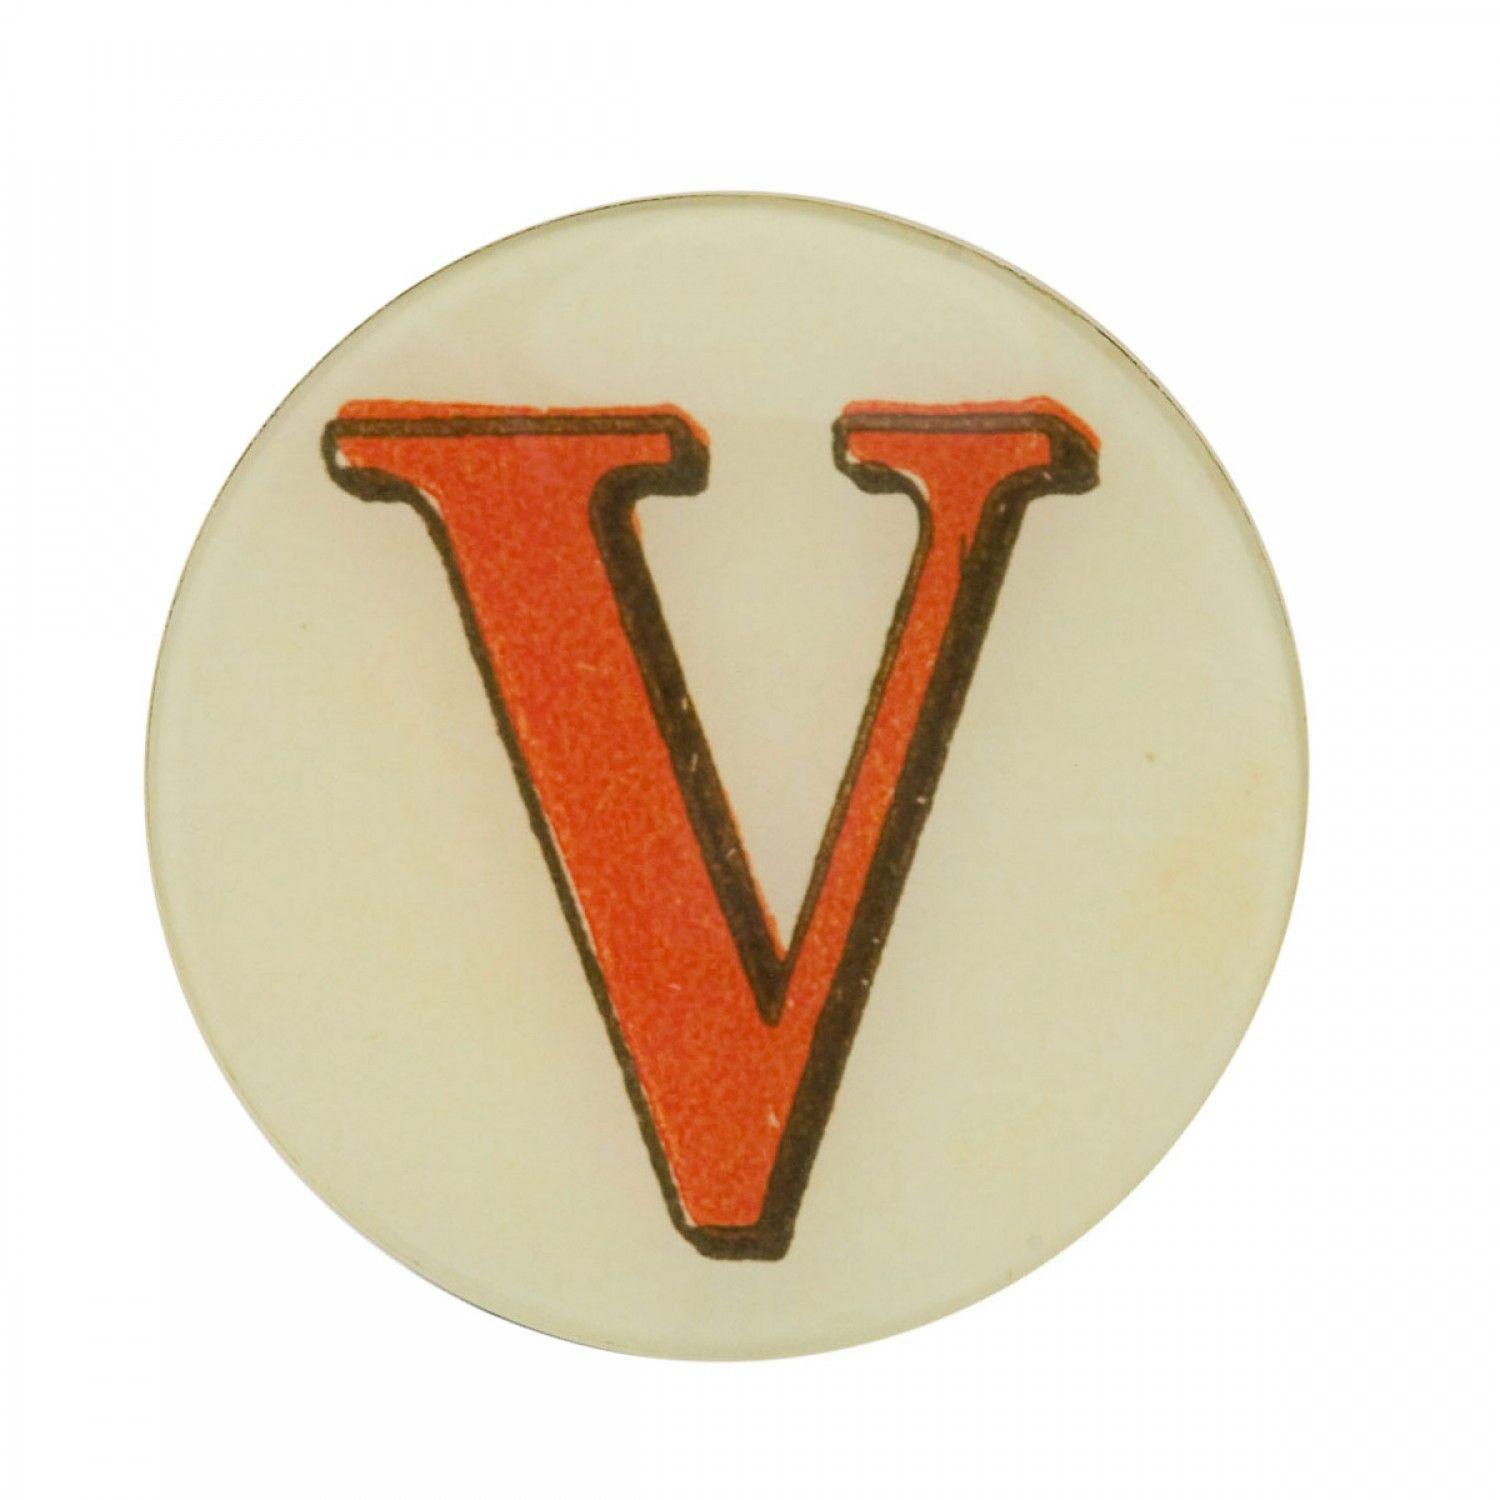 4 Letter V Logo - 5 3/4” Picture Plate Red Letter V